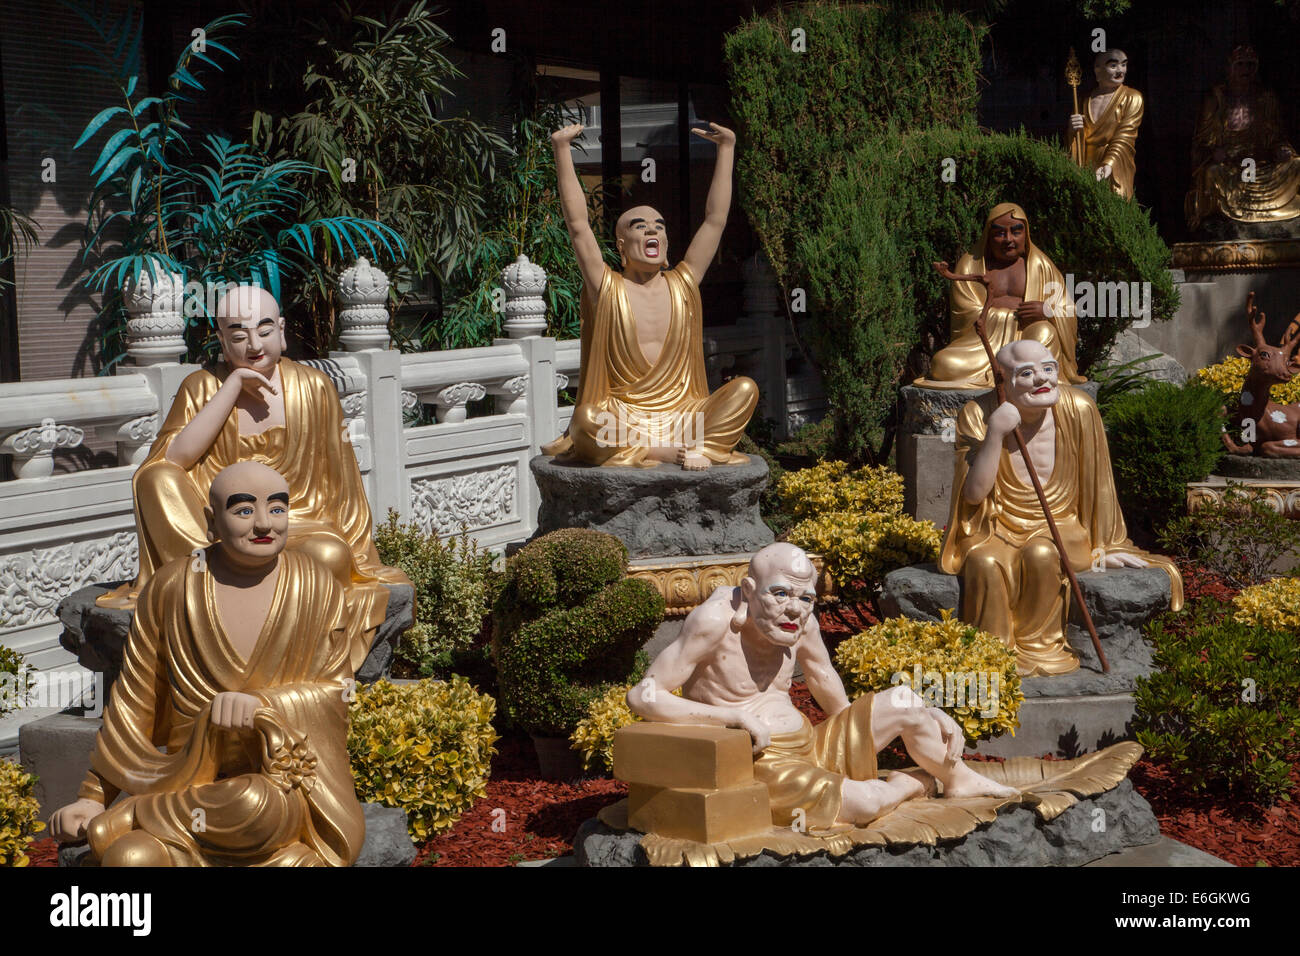 The Arhat Garden, Hsi Lai temple, disciples of the Buddha, Hacienda Heights, California, USA Stock Photo